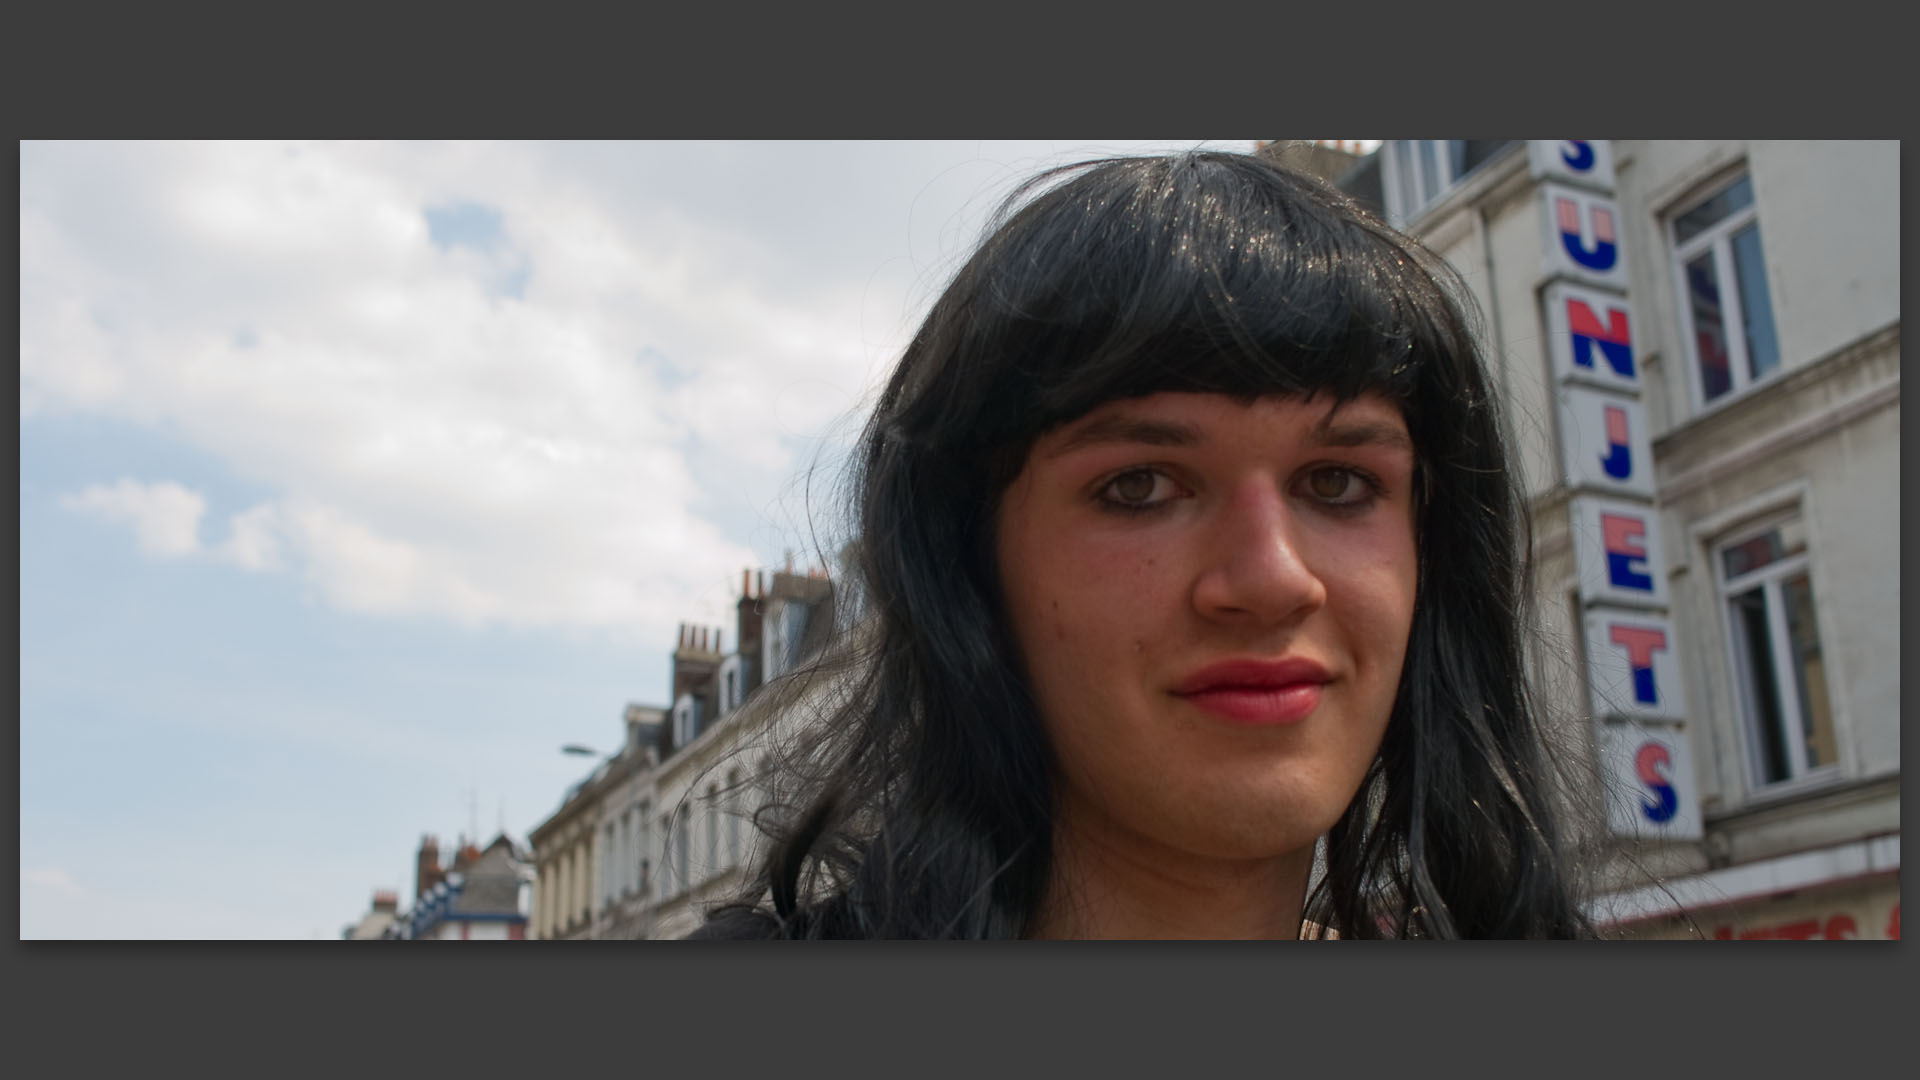 Jeune travesti à la lesbian et gay pride, rue Solférino, à Lille.